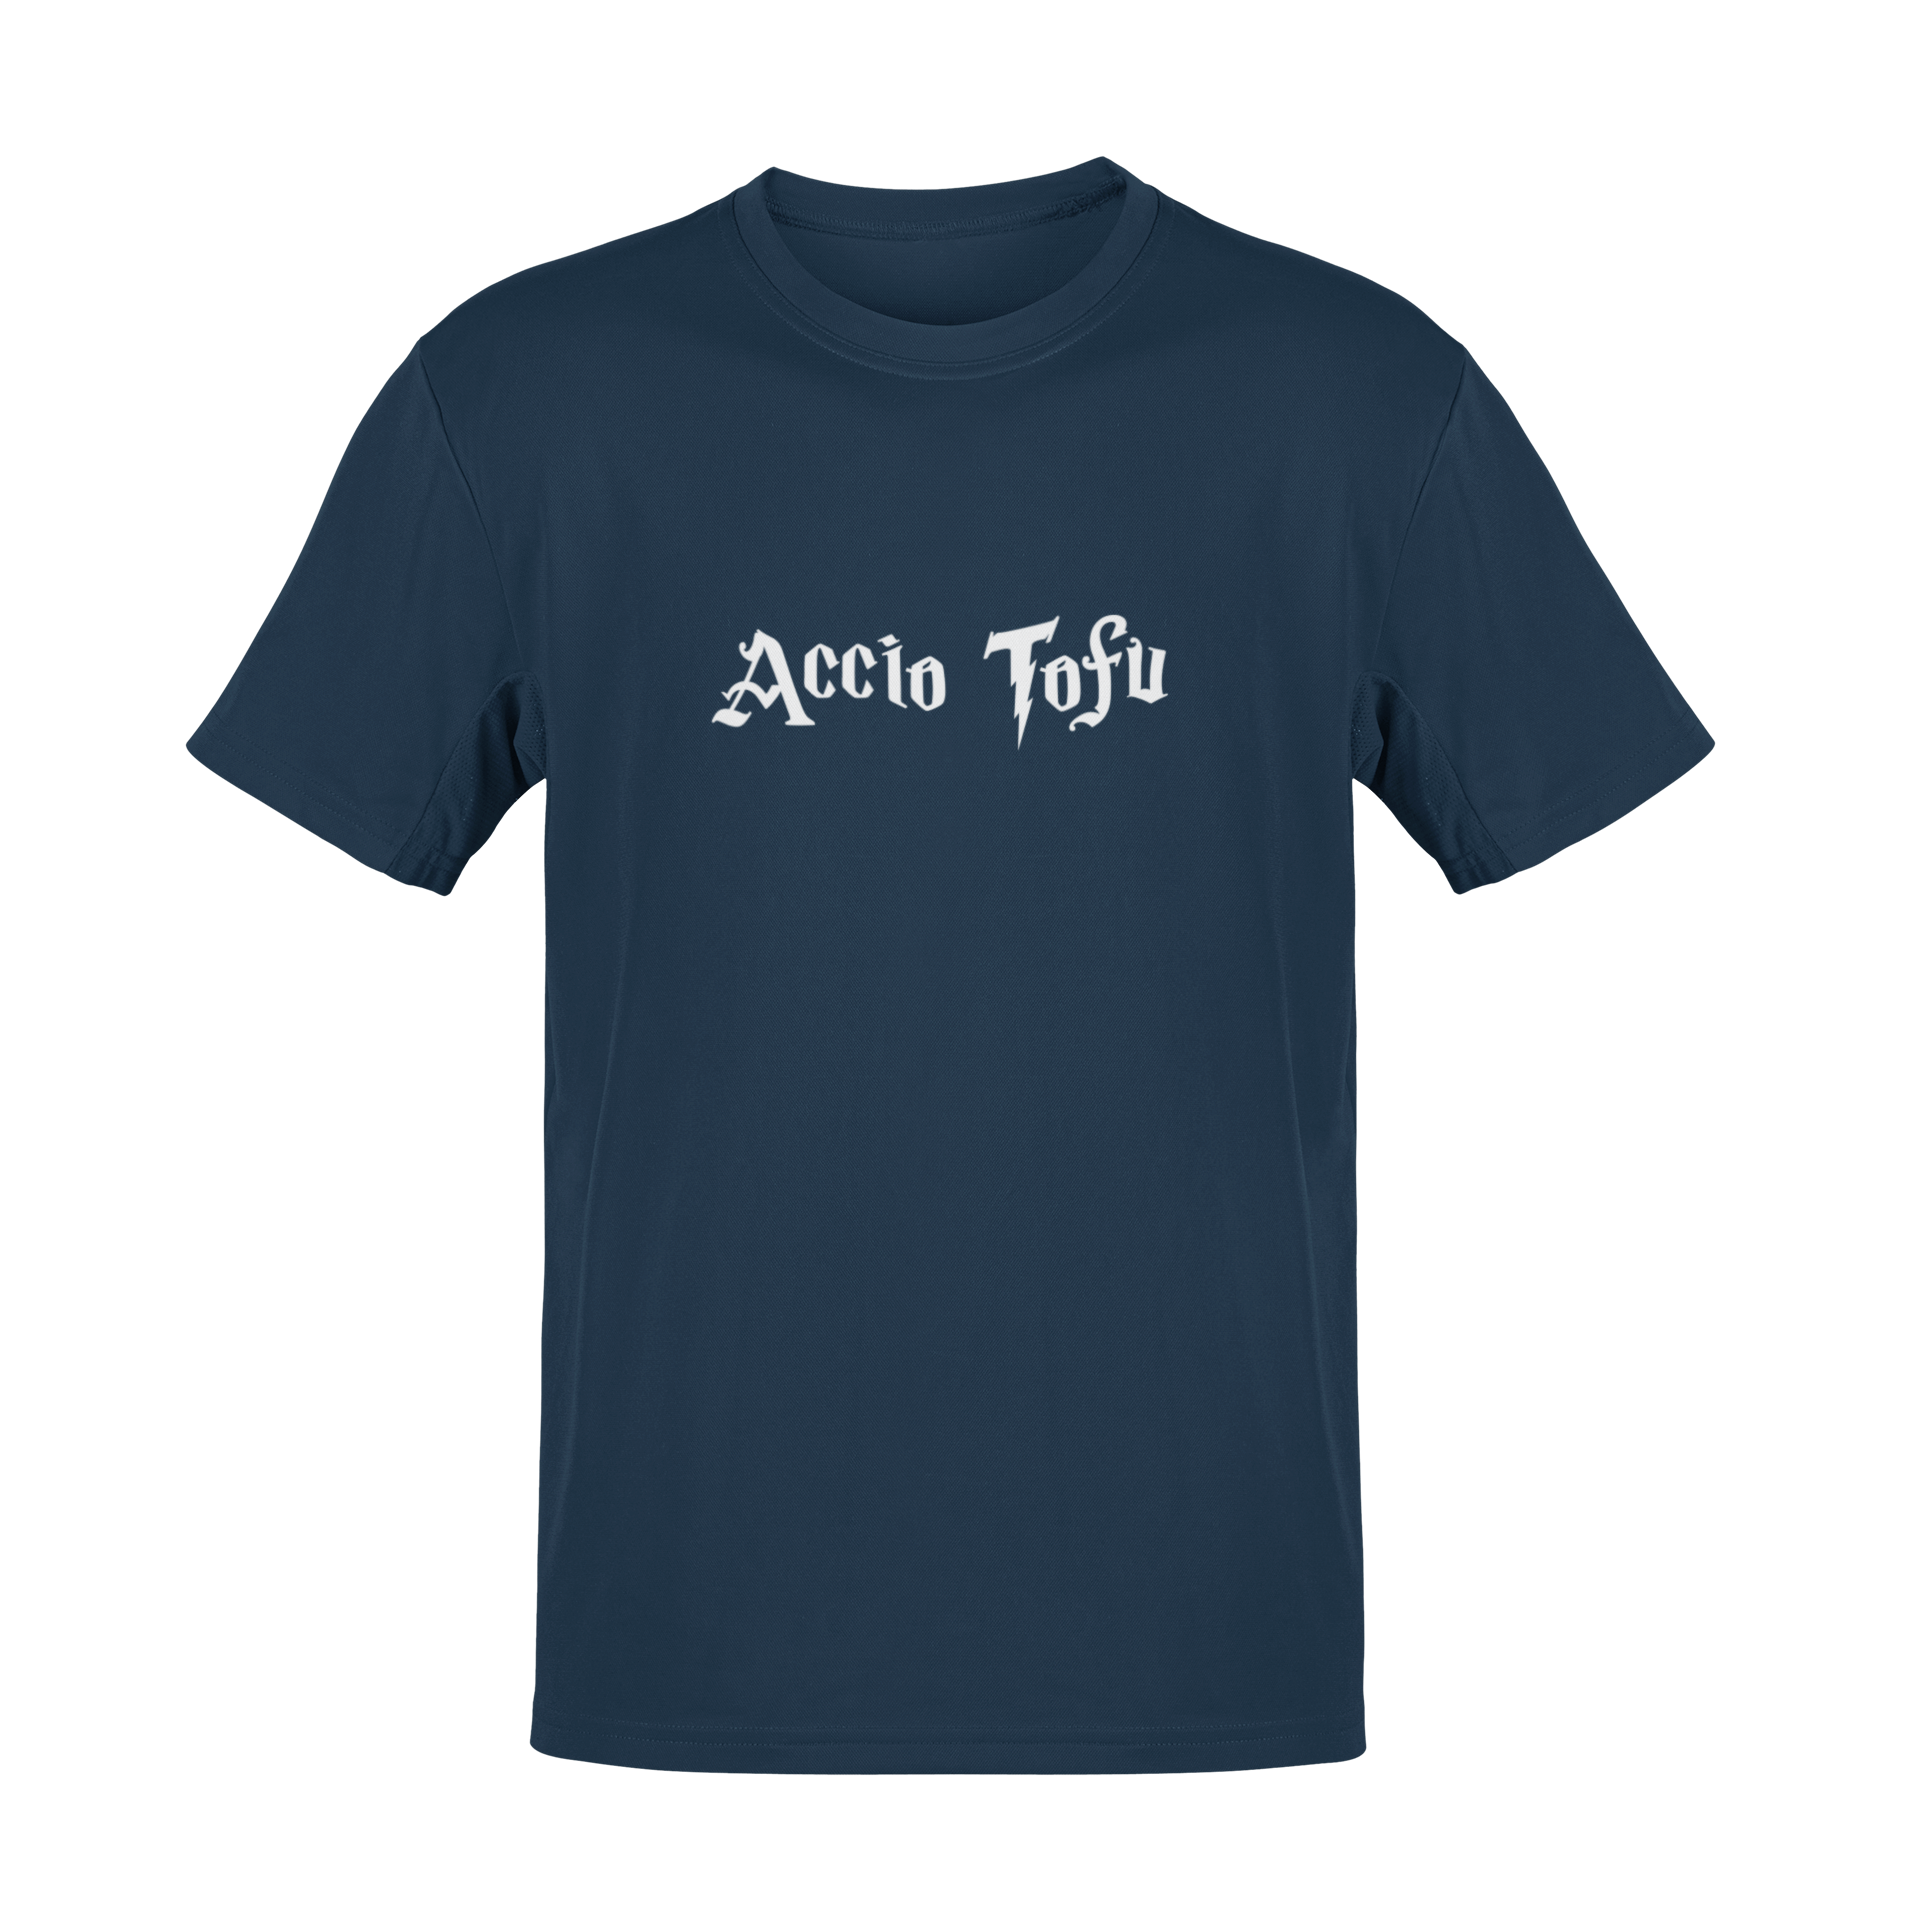 Accio Tofu - Herren T-Shirt